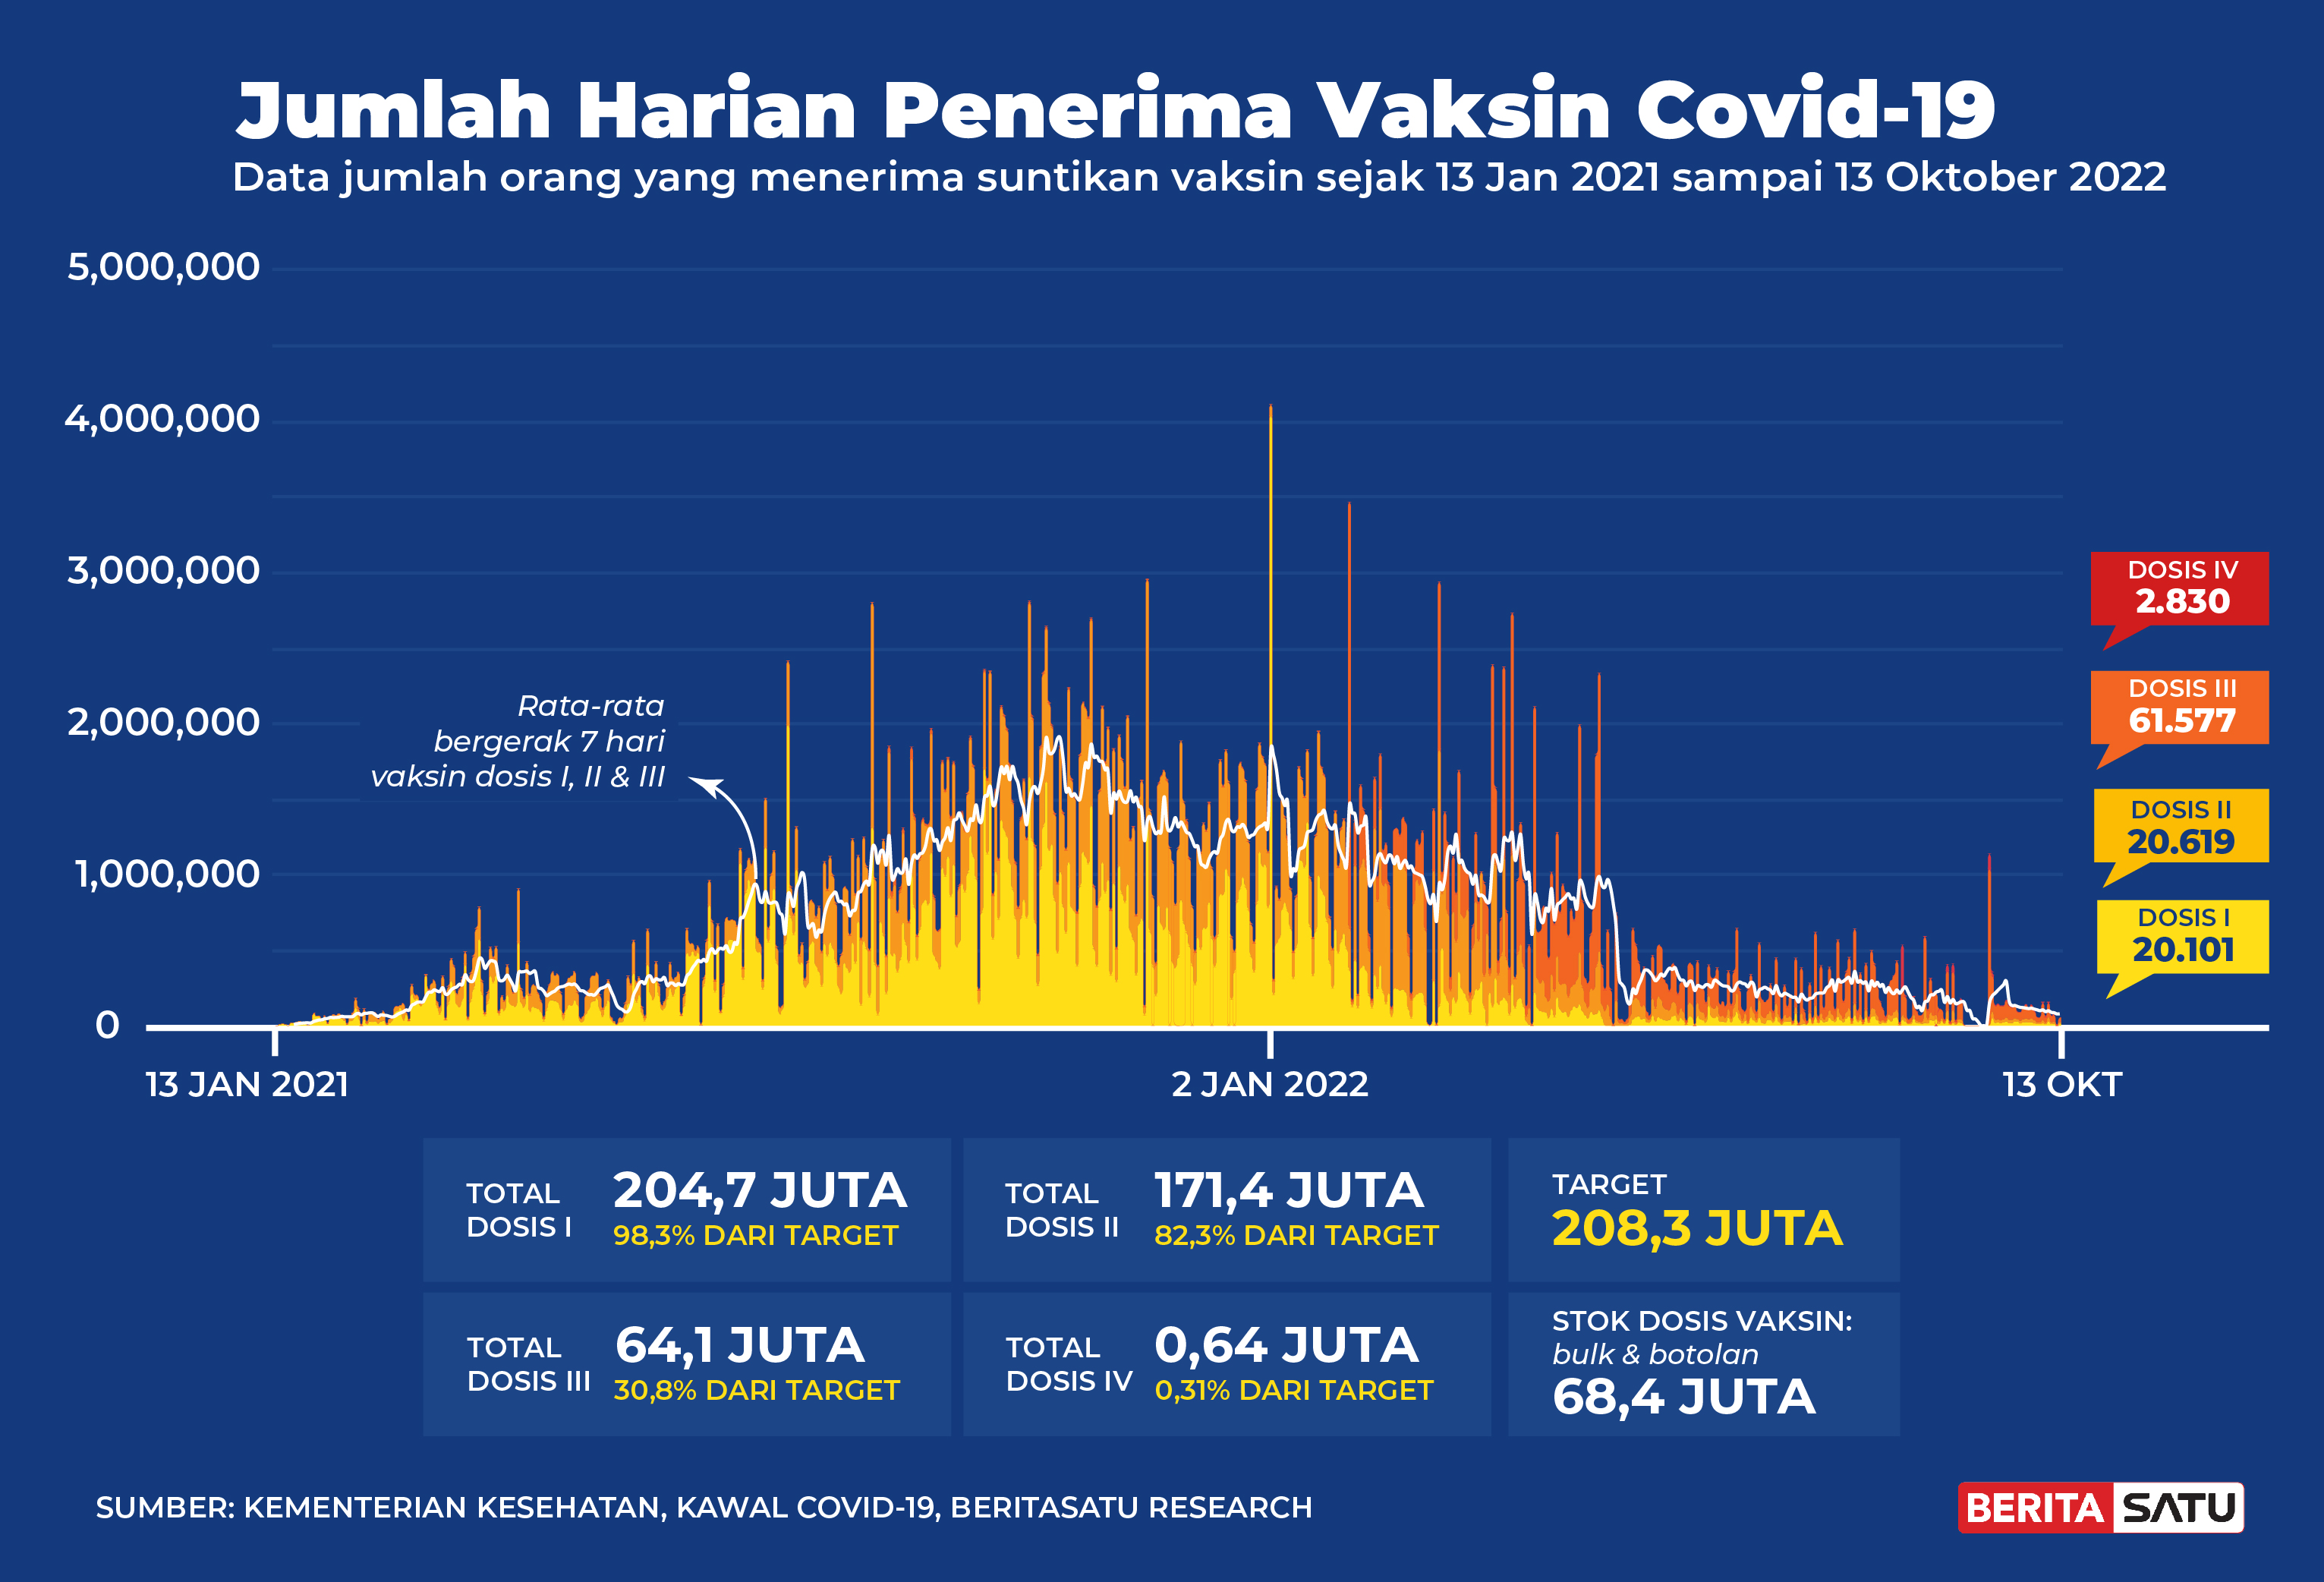 Data Penerima Vaksin Covid-19 sampai 13 Oktober 2022